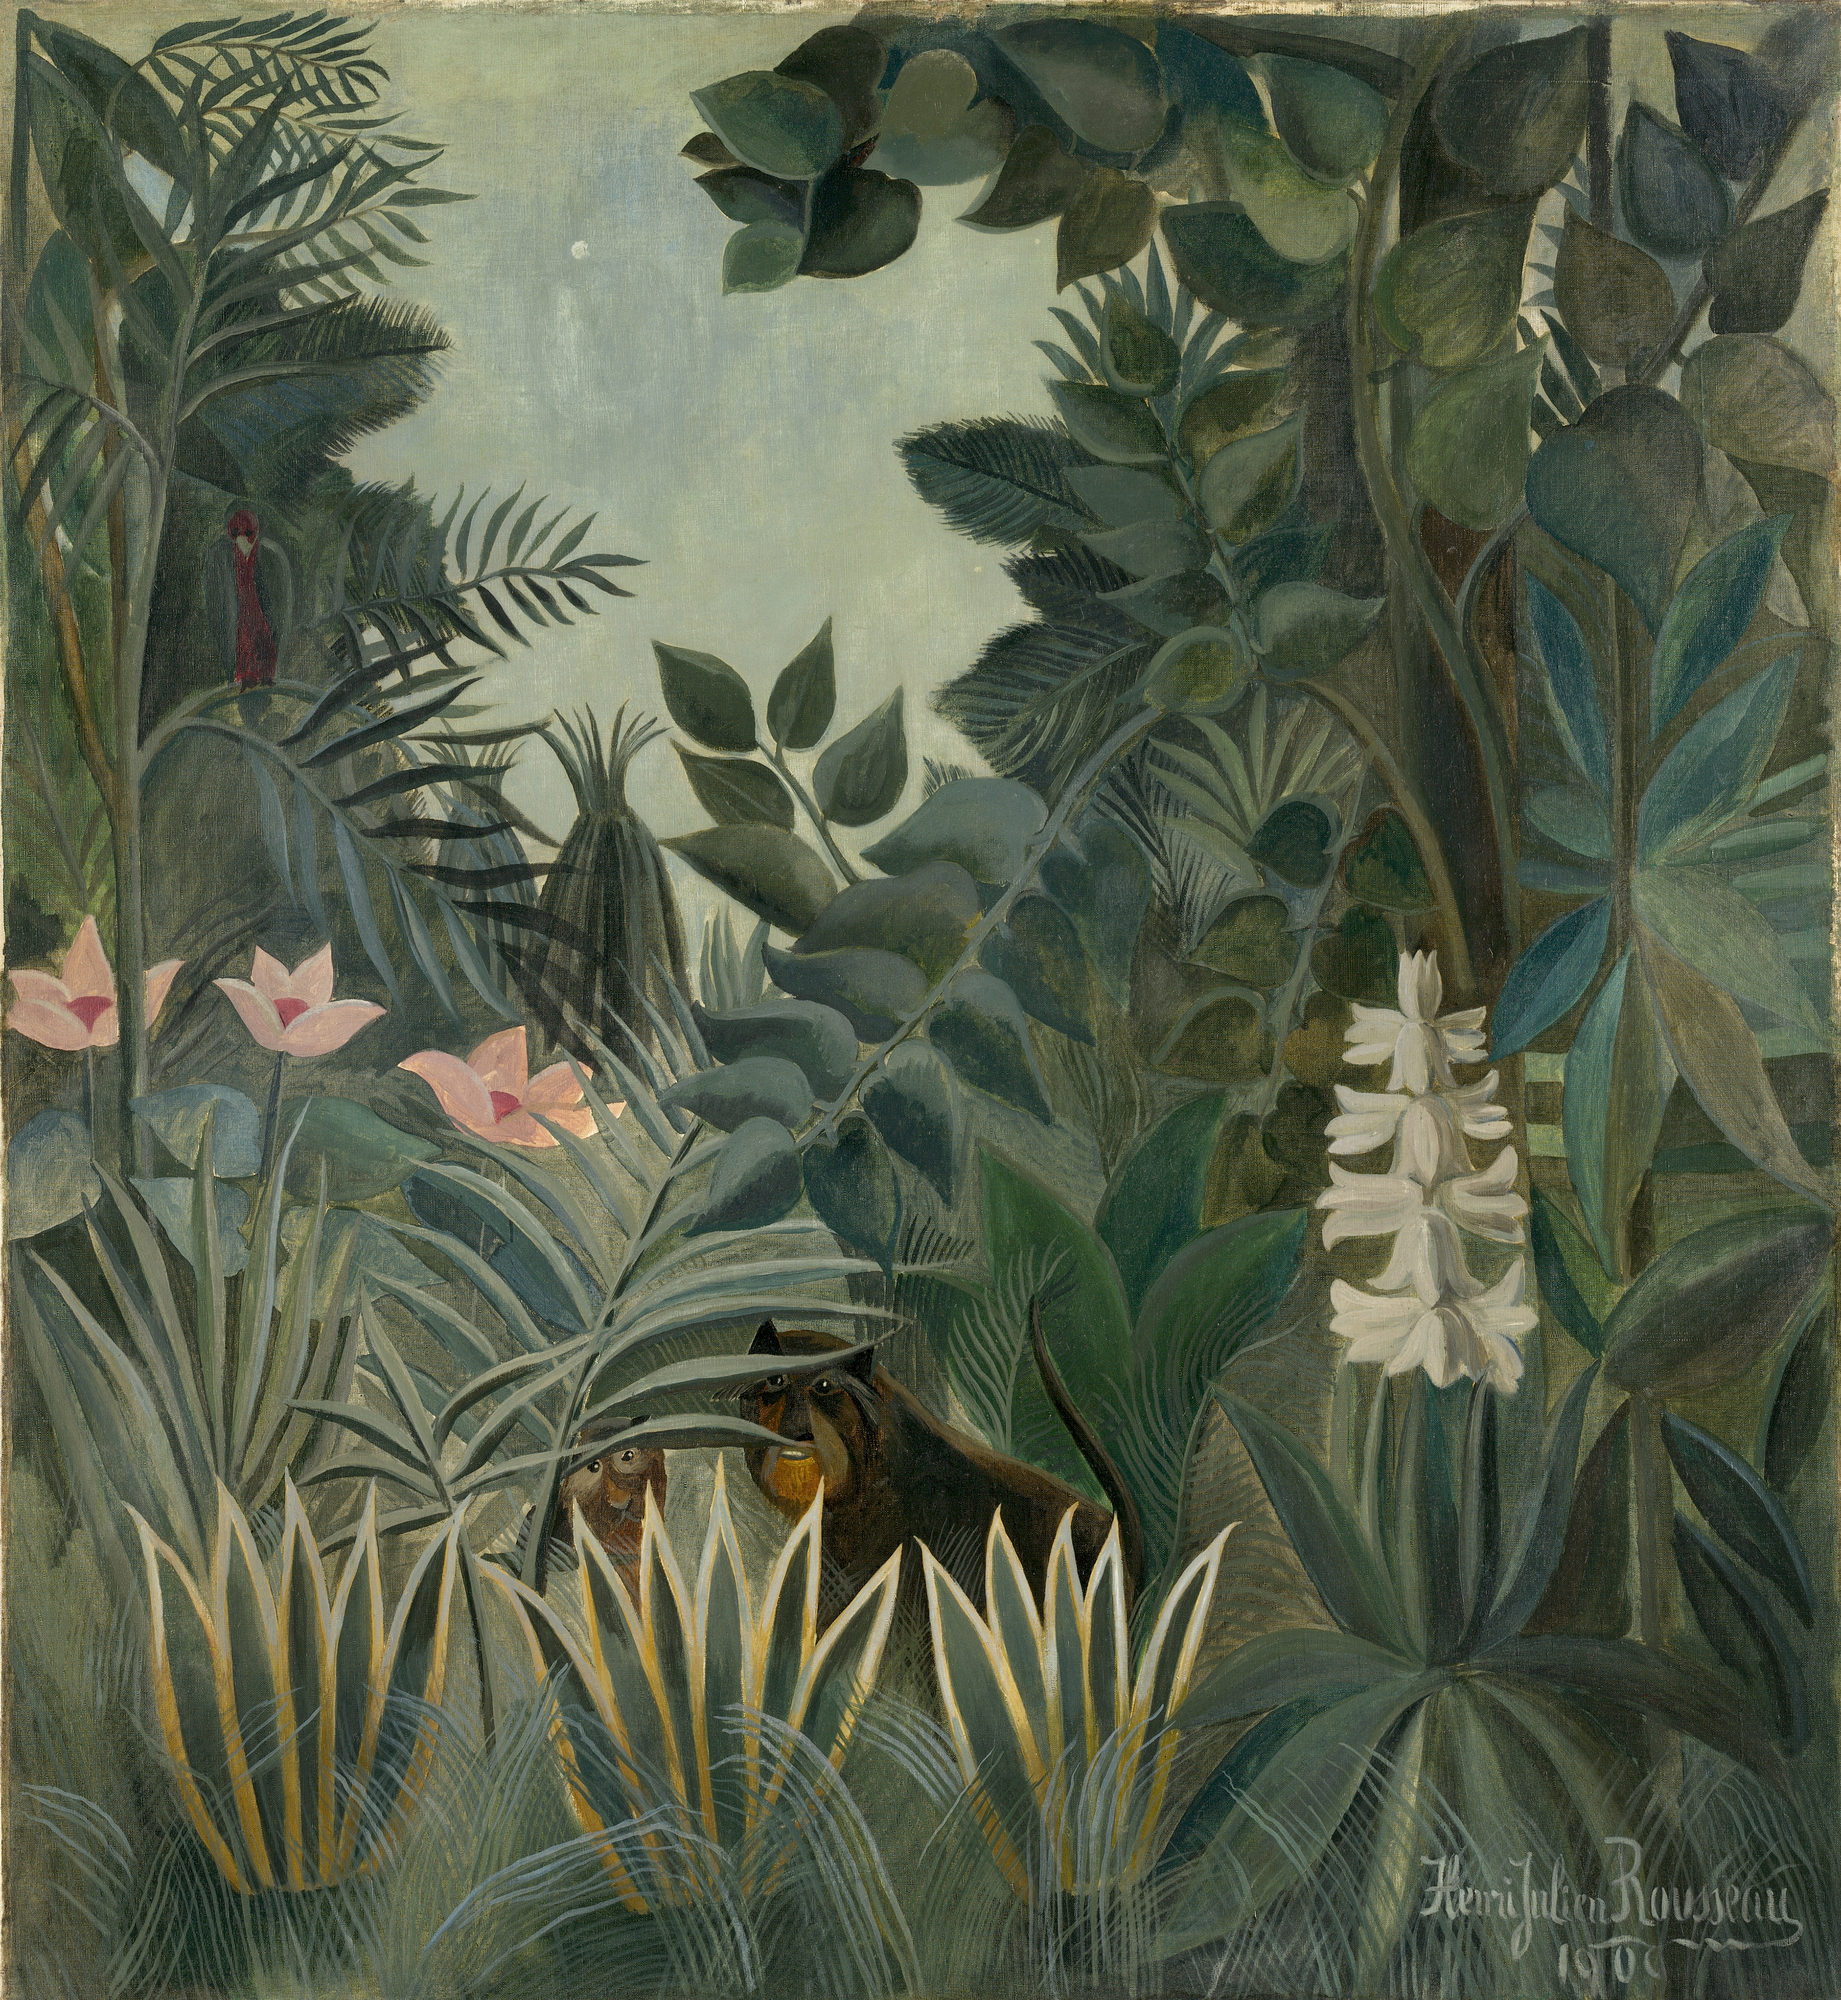 Dżungla Równikowa by Henri Rousseau - 1909 - 140.6 x 129.5 cm 